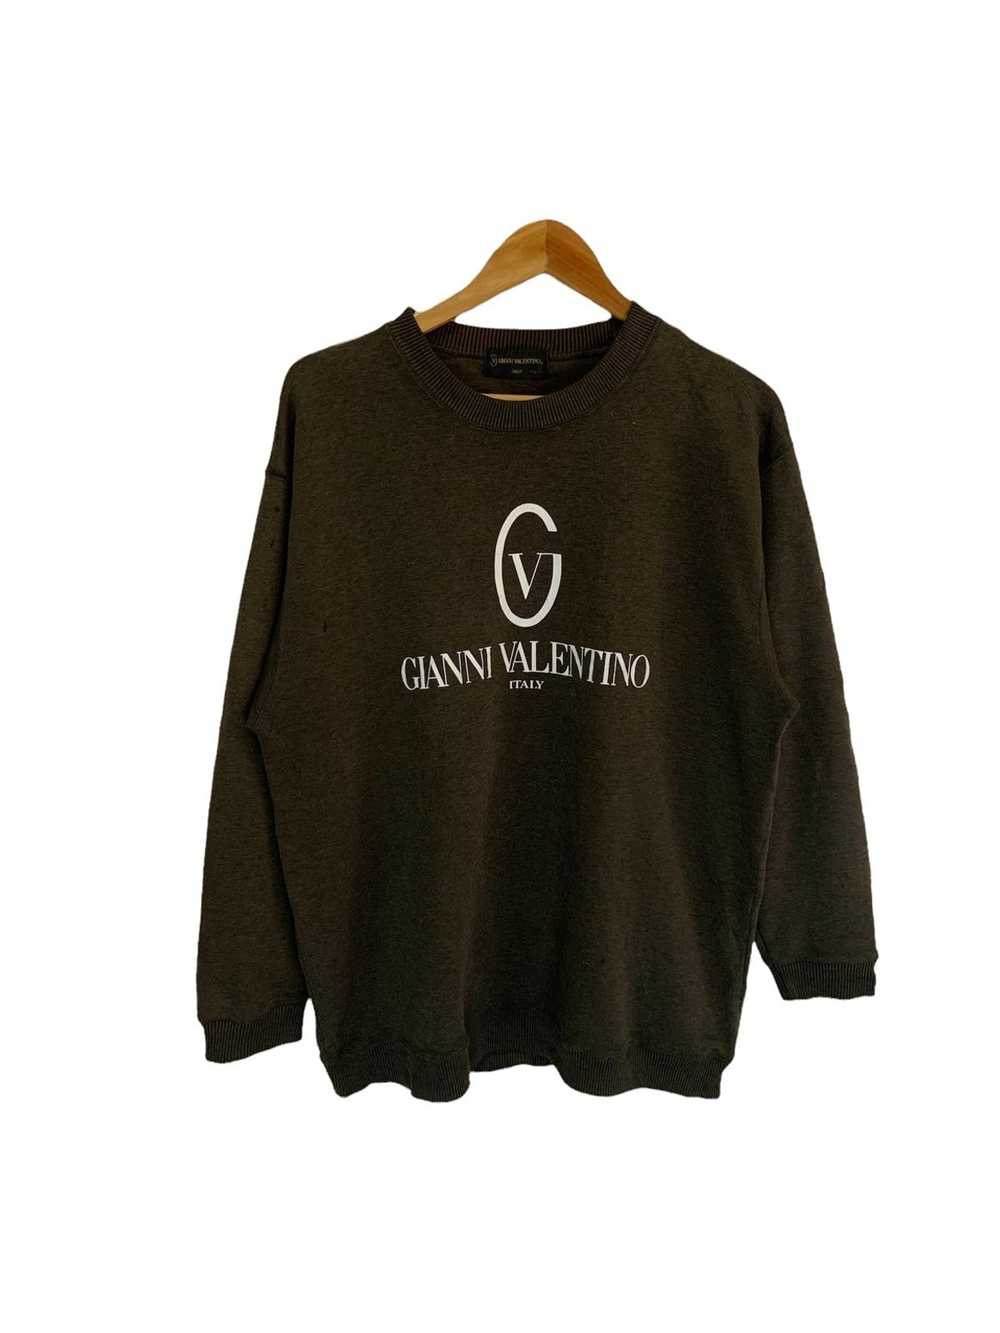 Gianni × Valentino Gianni Valentino sweatshirt - image 1